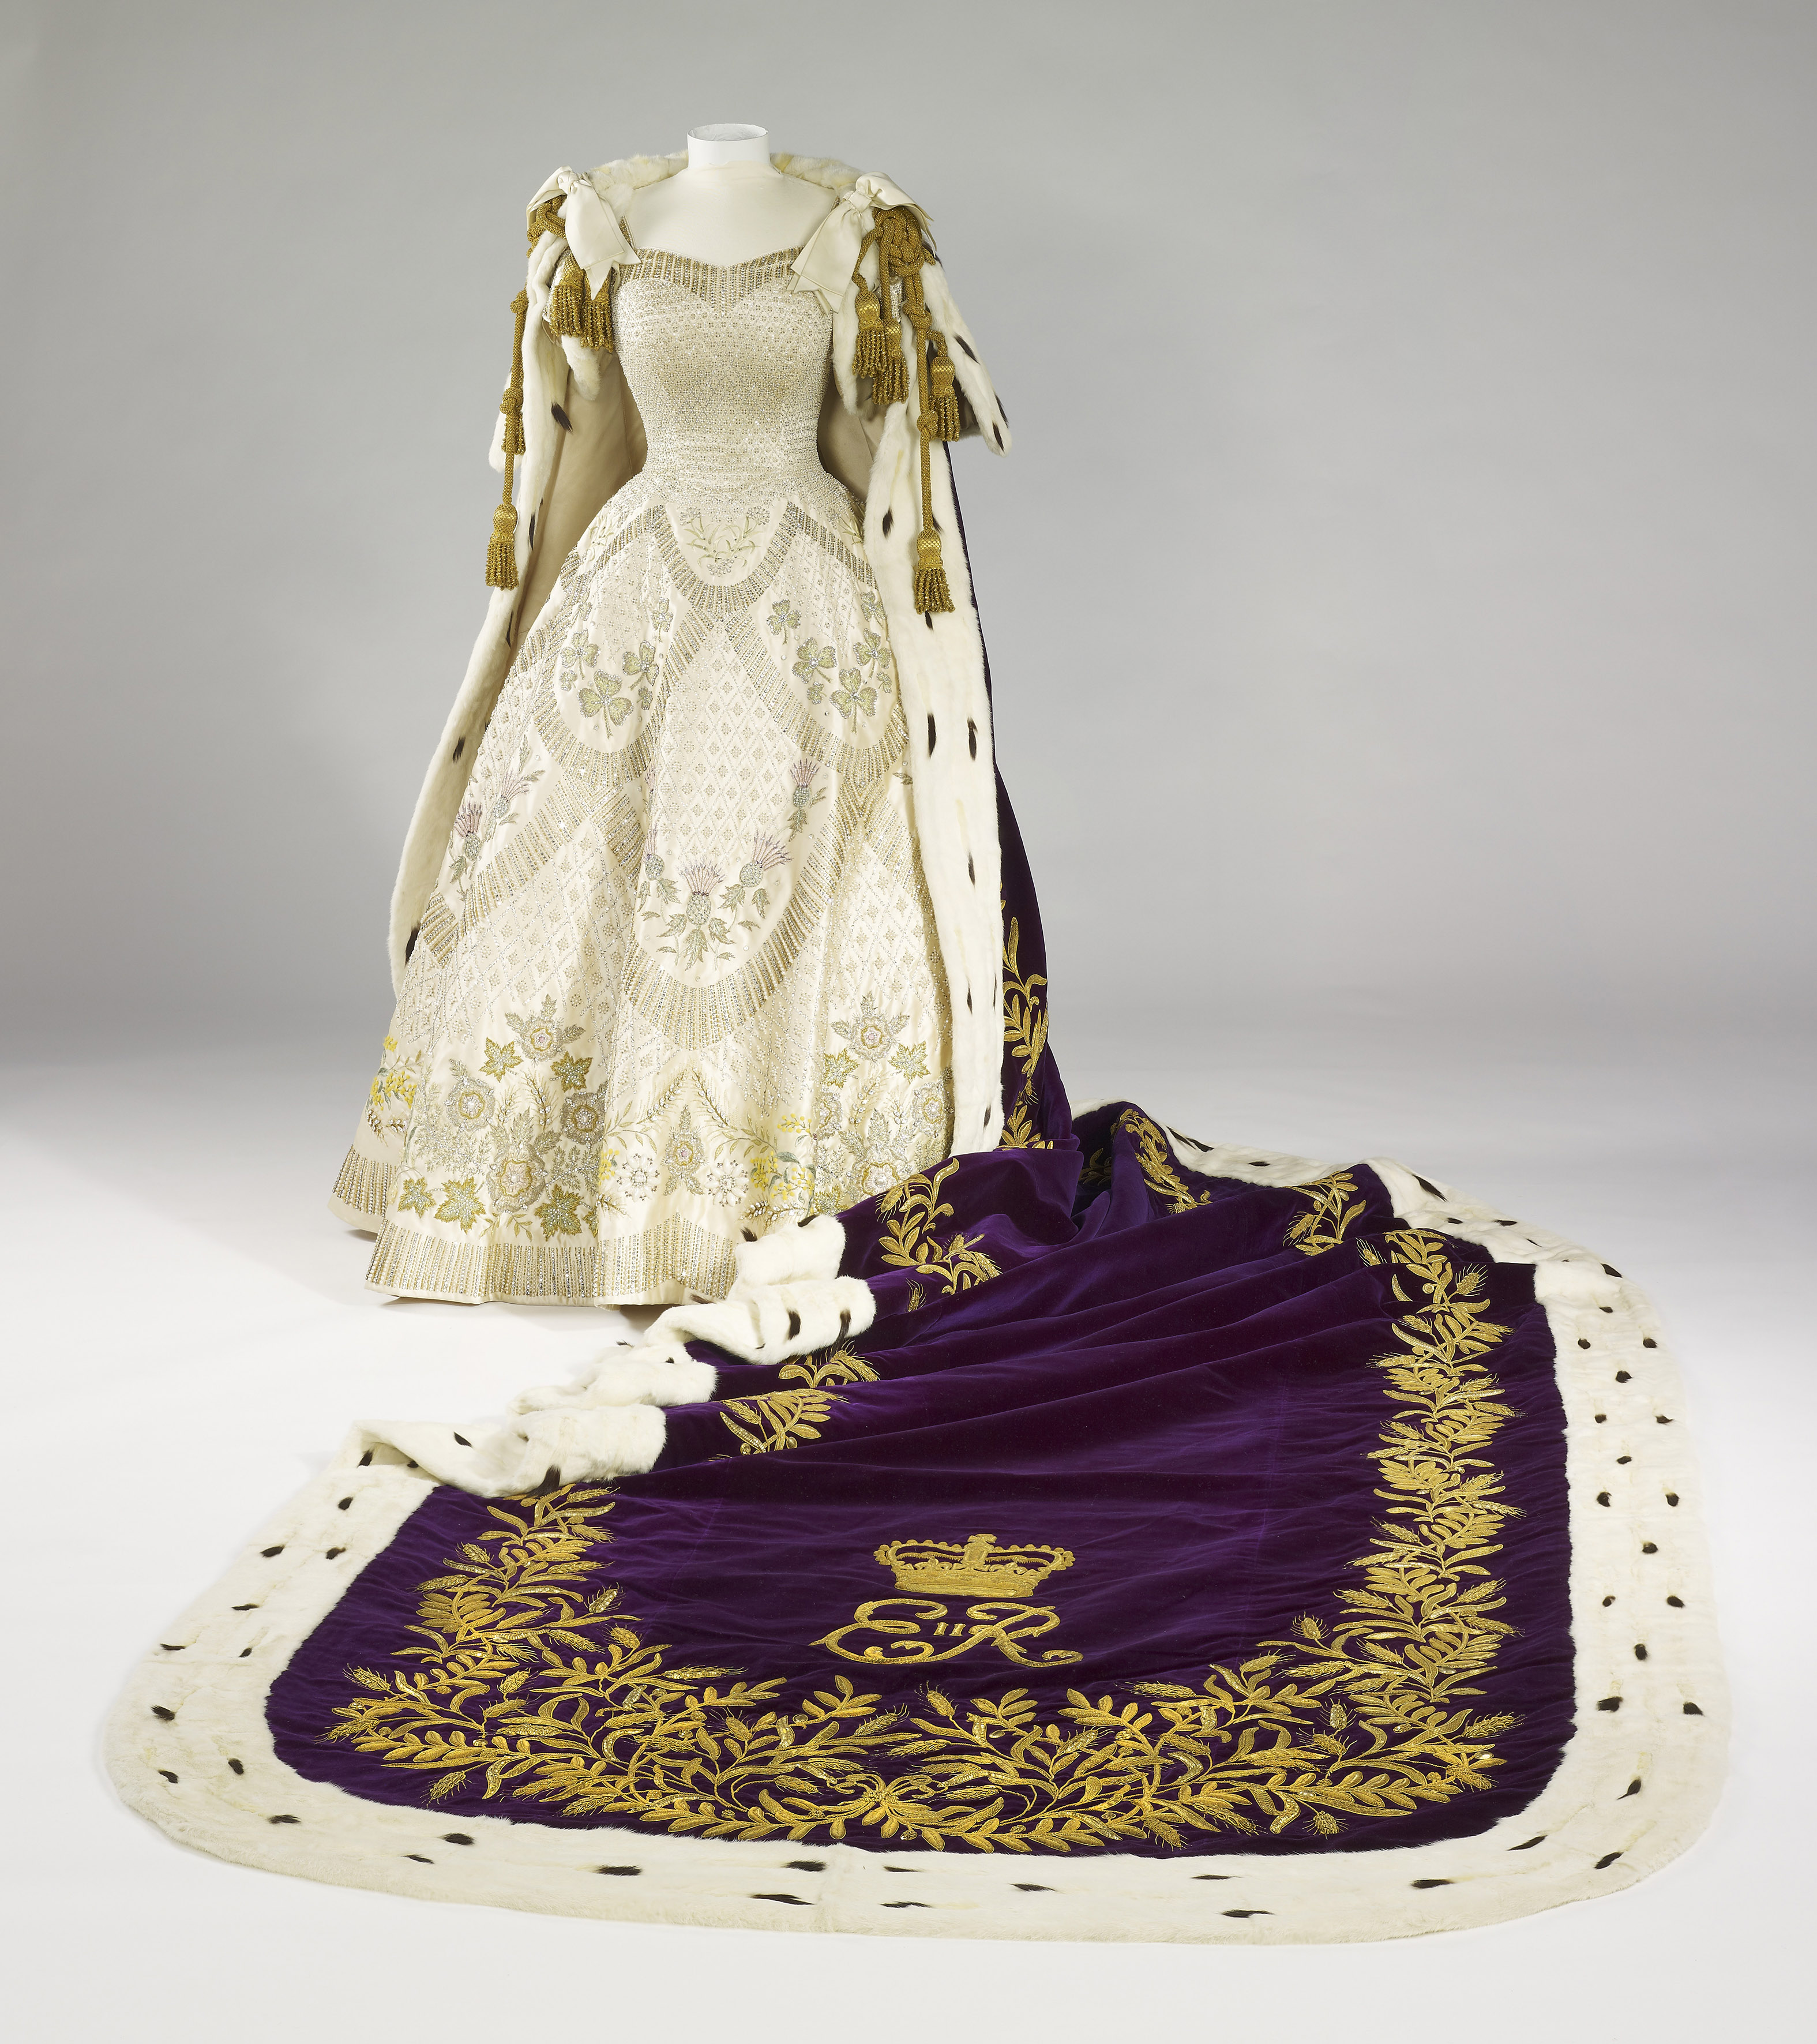 The Queen's coronation dress 